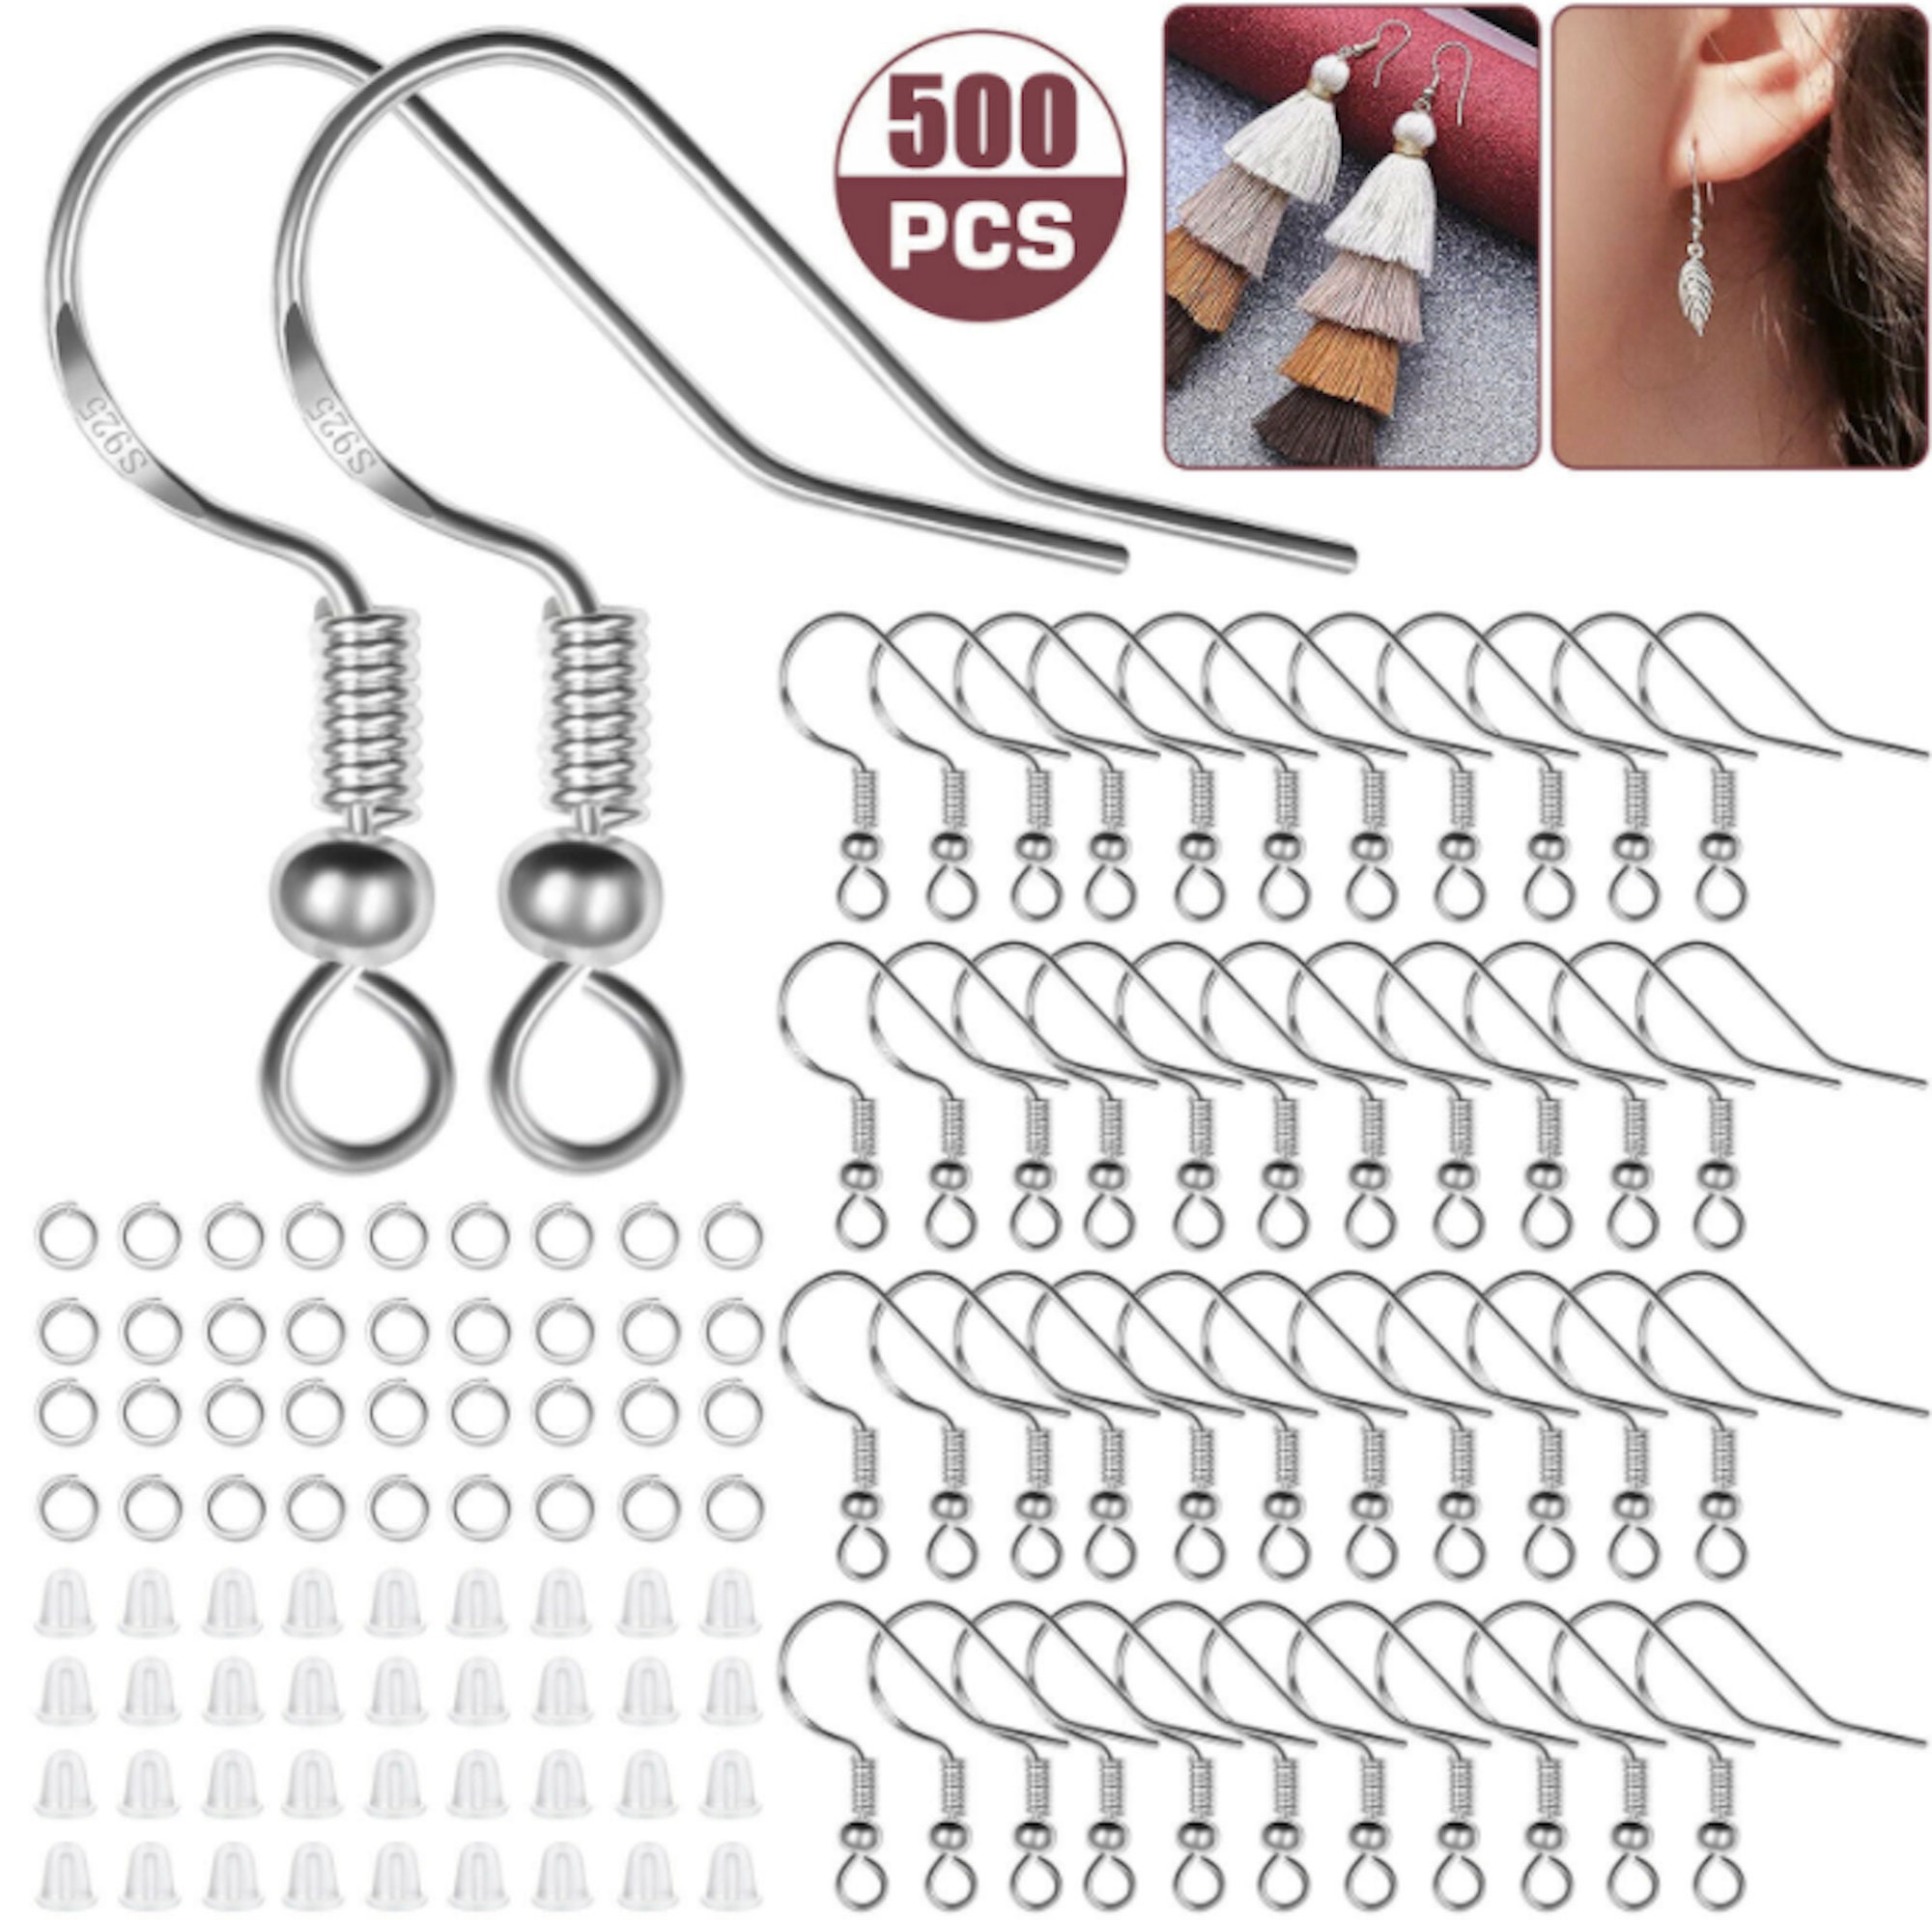 925 Sterling Earring Hooks | 600 PCS Kelofty Fish Hook Earrings Making Kit  with Rubber Earring Backs Stoppers & Open Jump Rings, French Ear Wires Fish